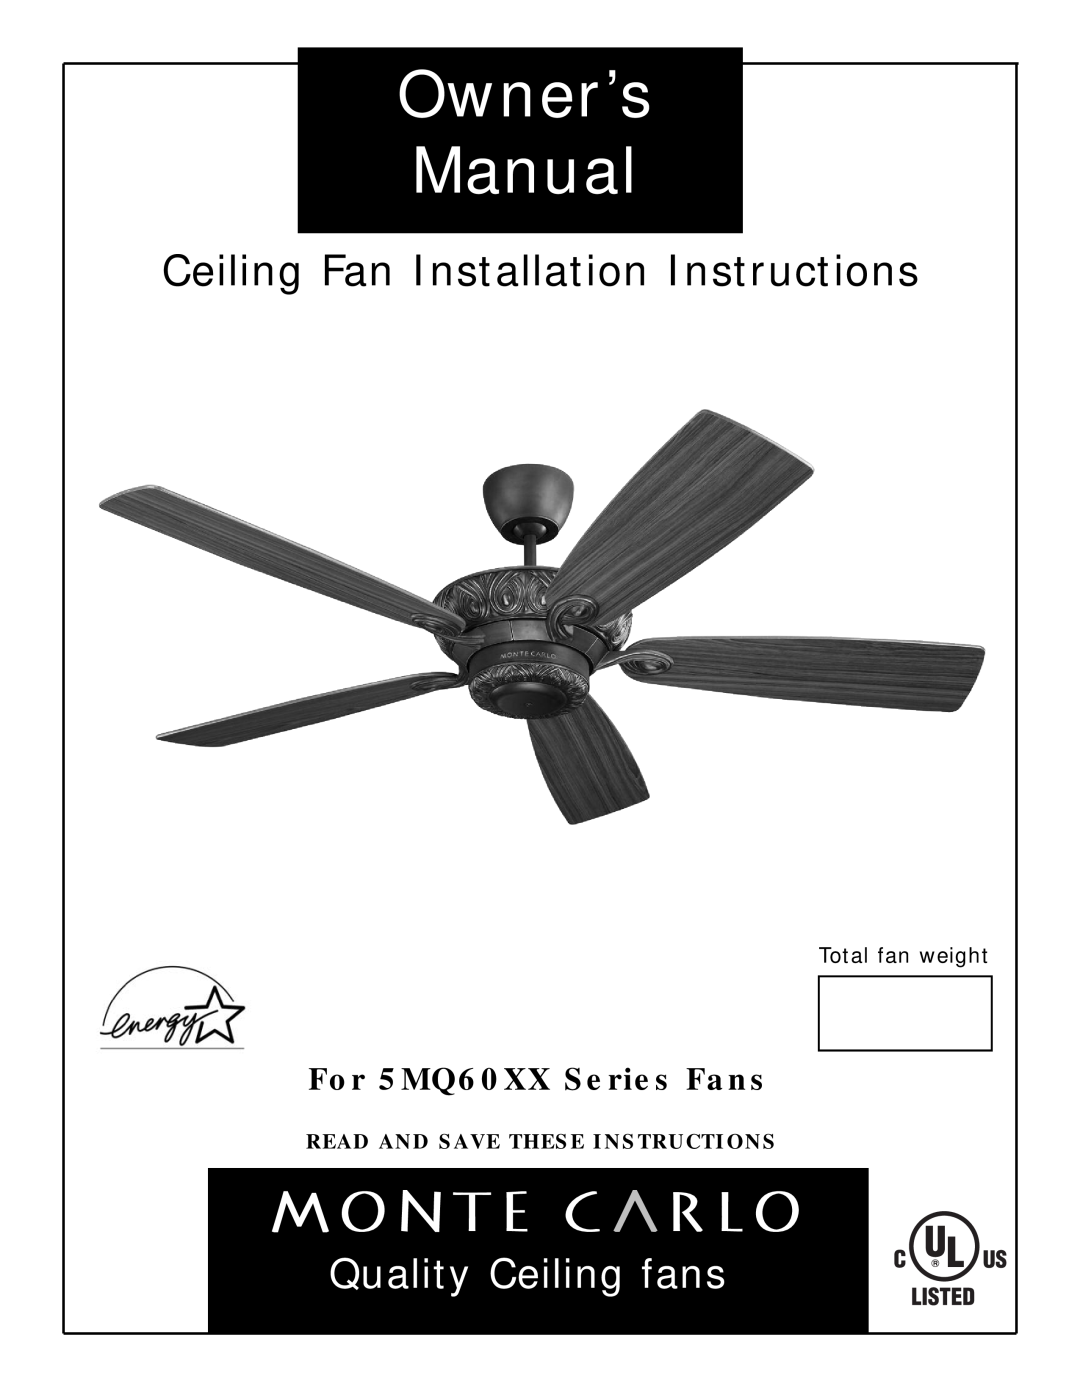 Monte Carlo Fan Company 5MQ60XX owner manual Ceiling Fan Installation Instructions, Quality Ceiling fans, Total fan weight 